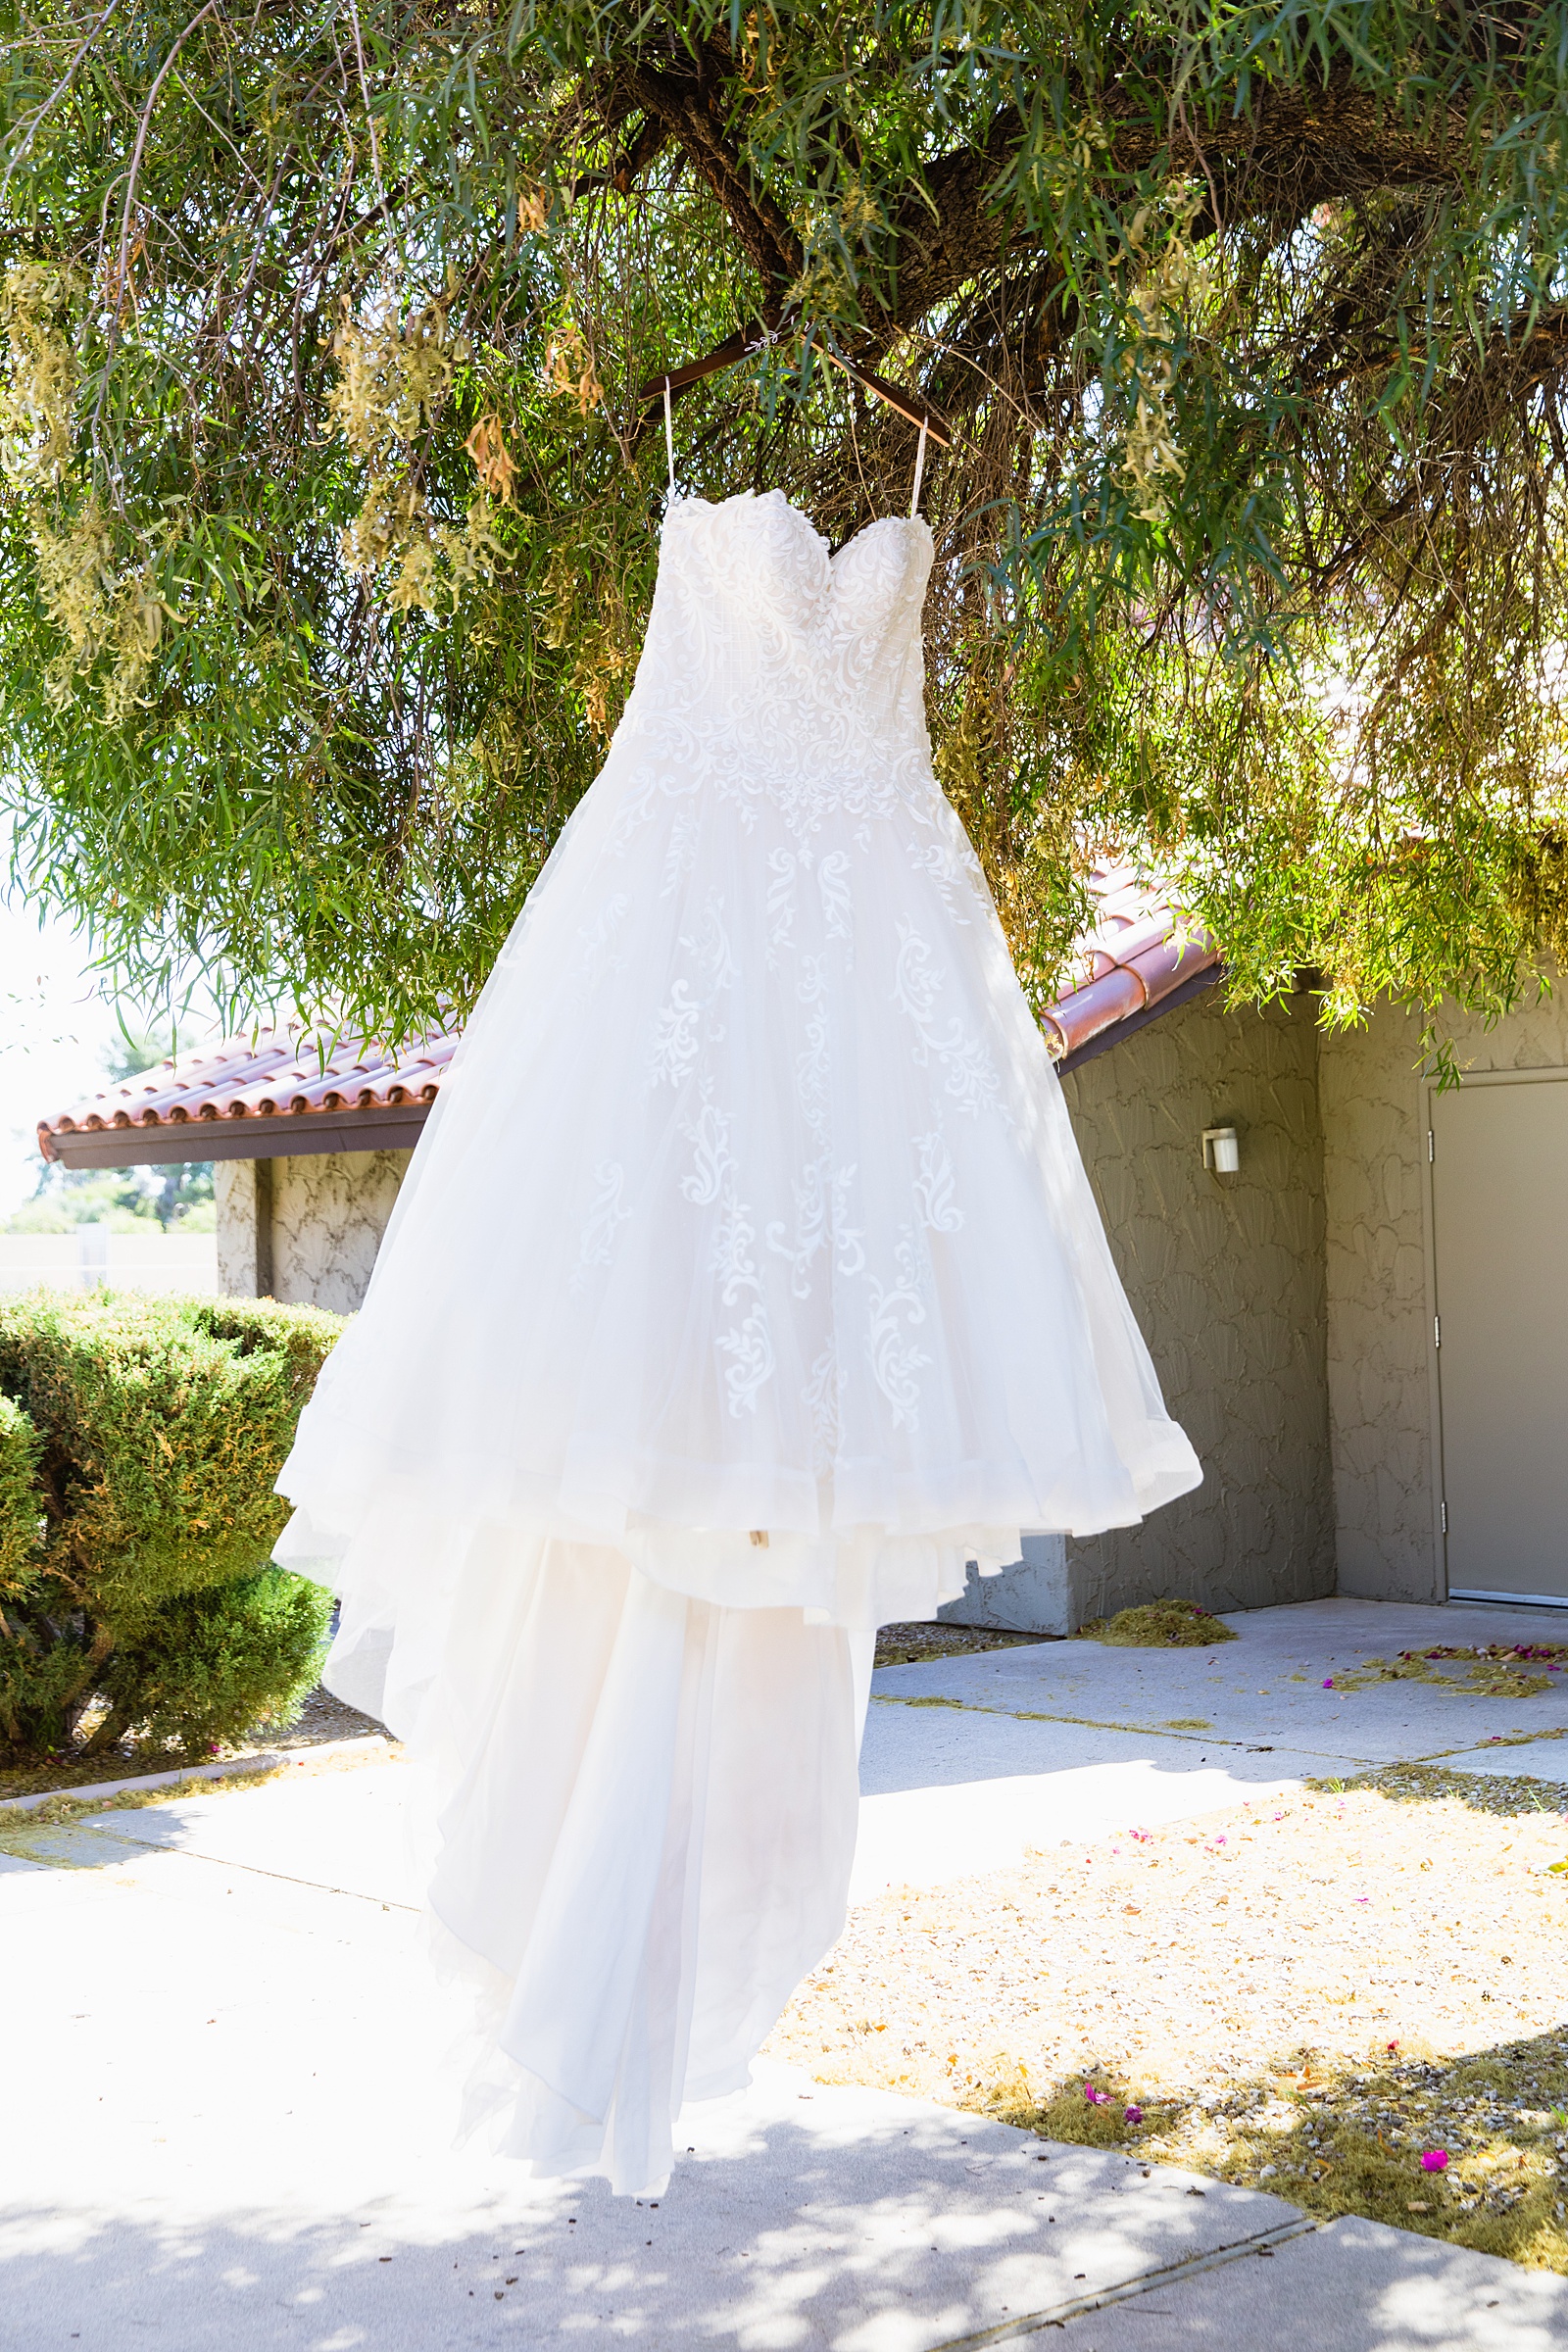 Bride's white lace wedding dress by PMA Photography.